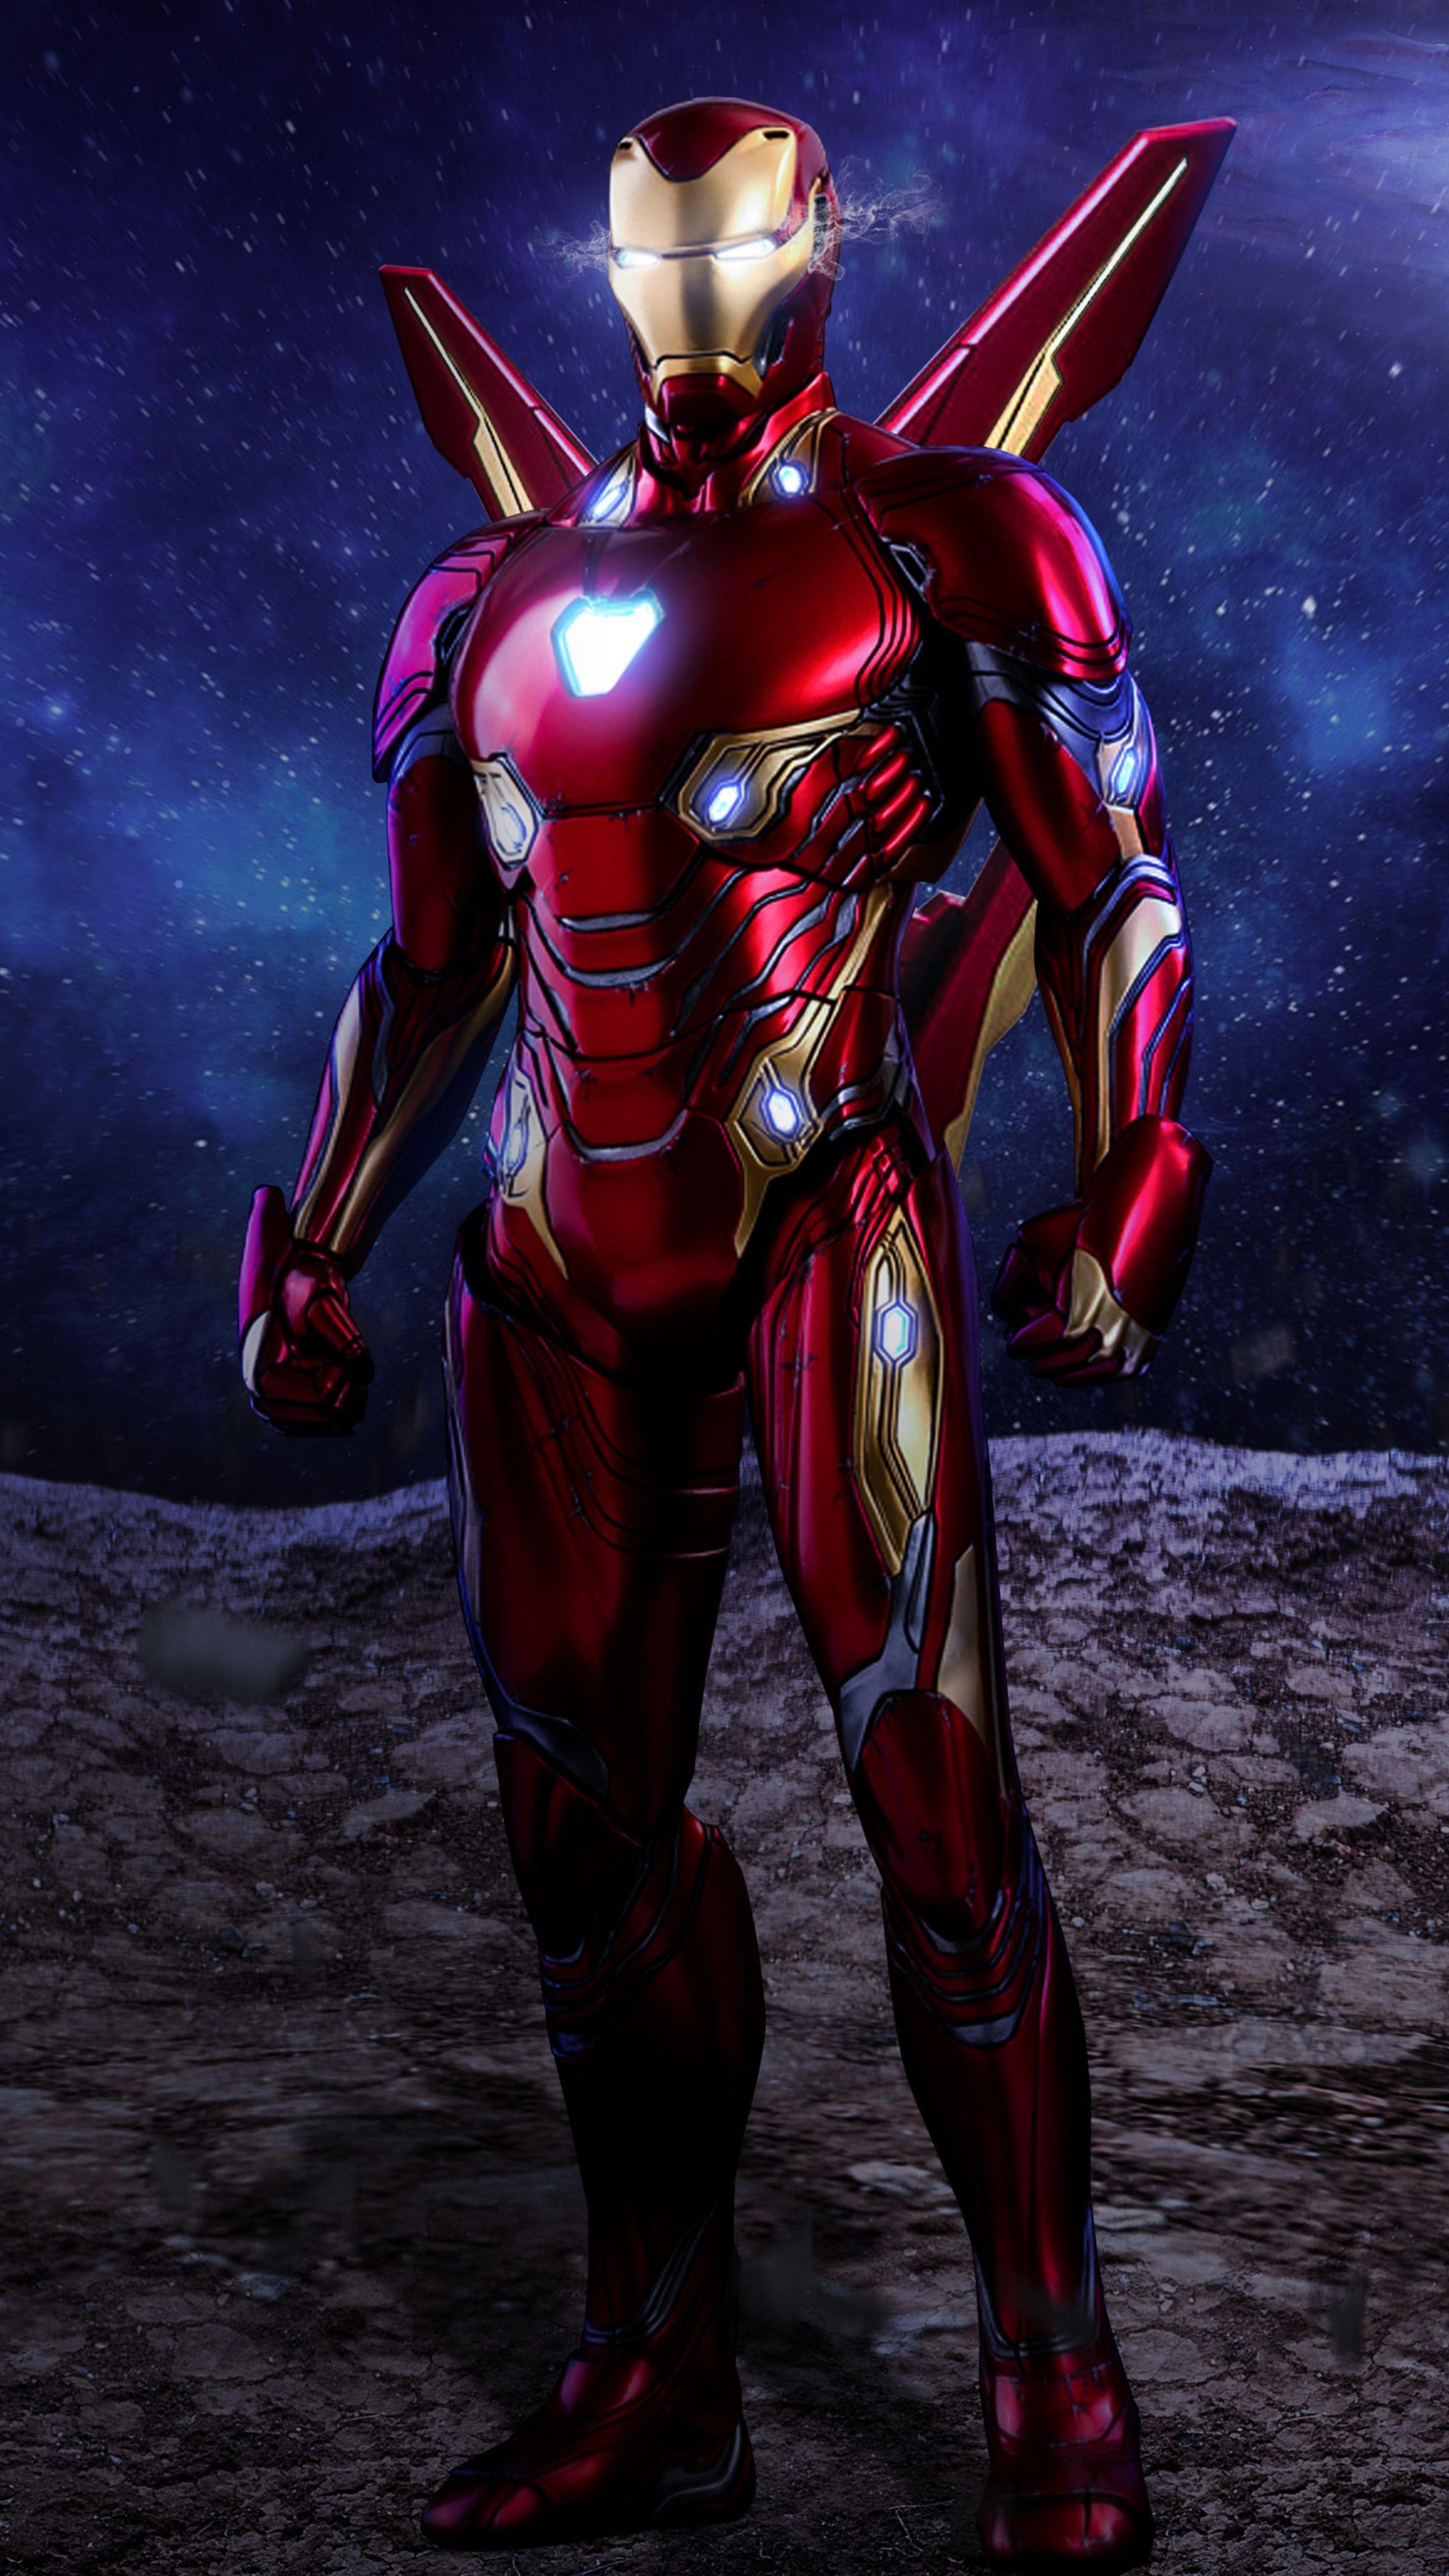 Iron Man Avengers Infinity War Suit Artwork Sony Xperia X